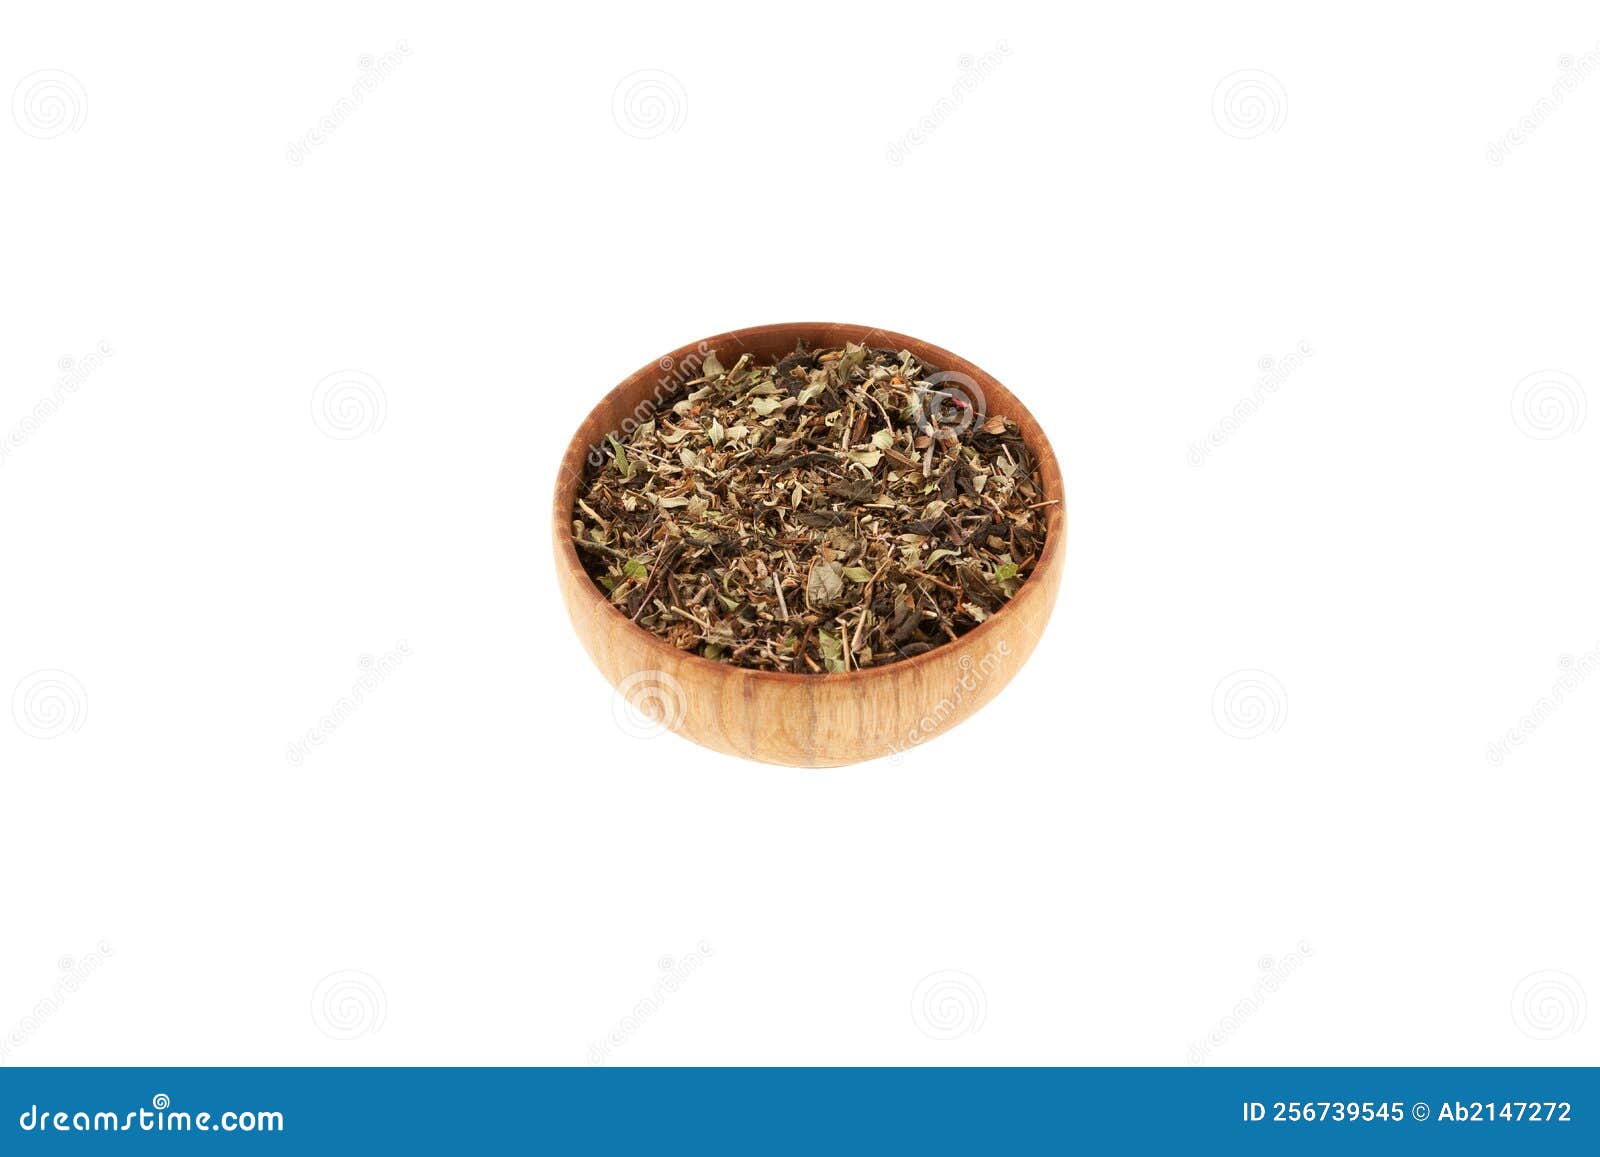 stonebreaker tea or chanca piedra tea in wooden bowl  on white background. stonebreaker tea prevent kidney stone formation